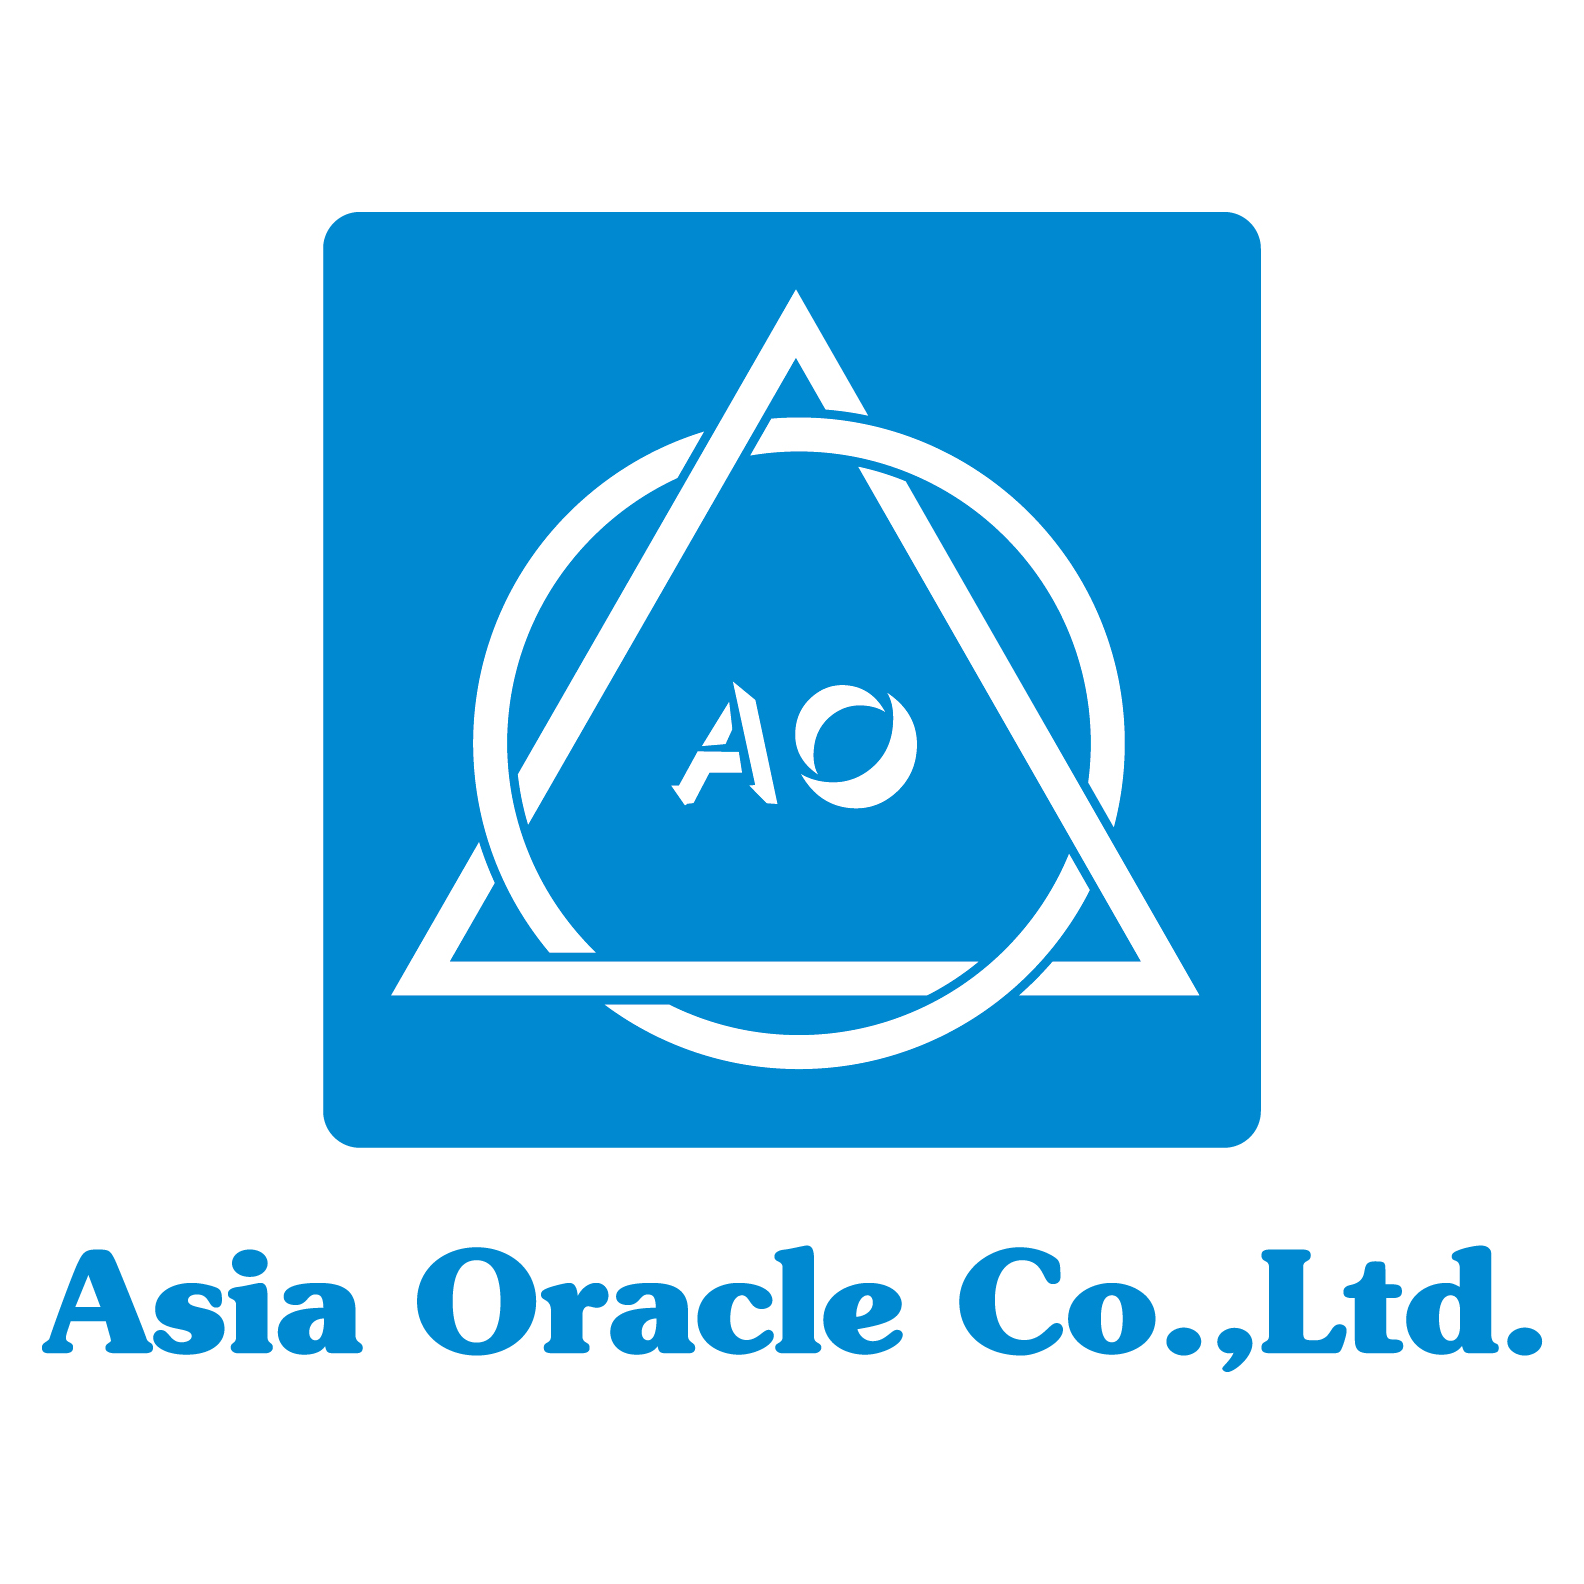 Asia Oracle Co.,Ltd